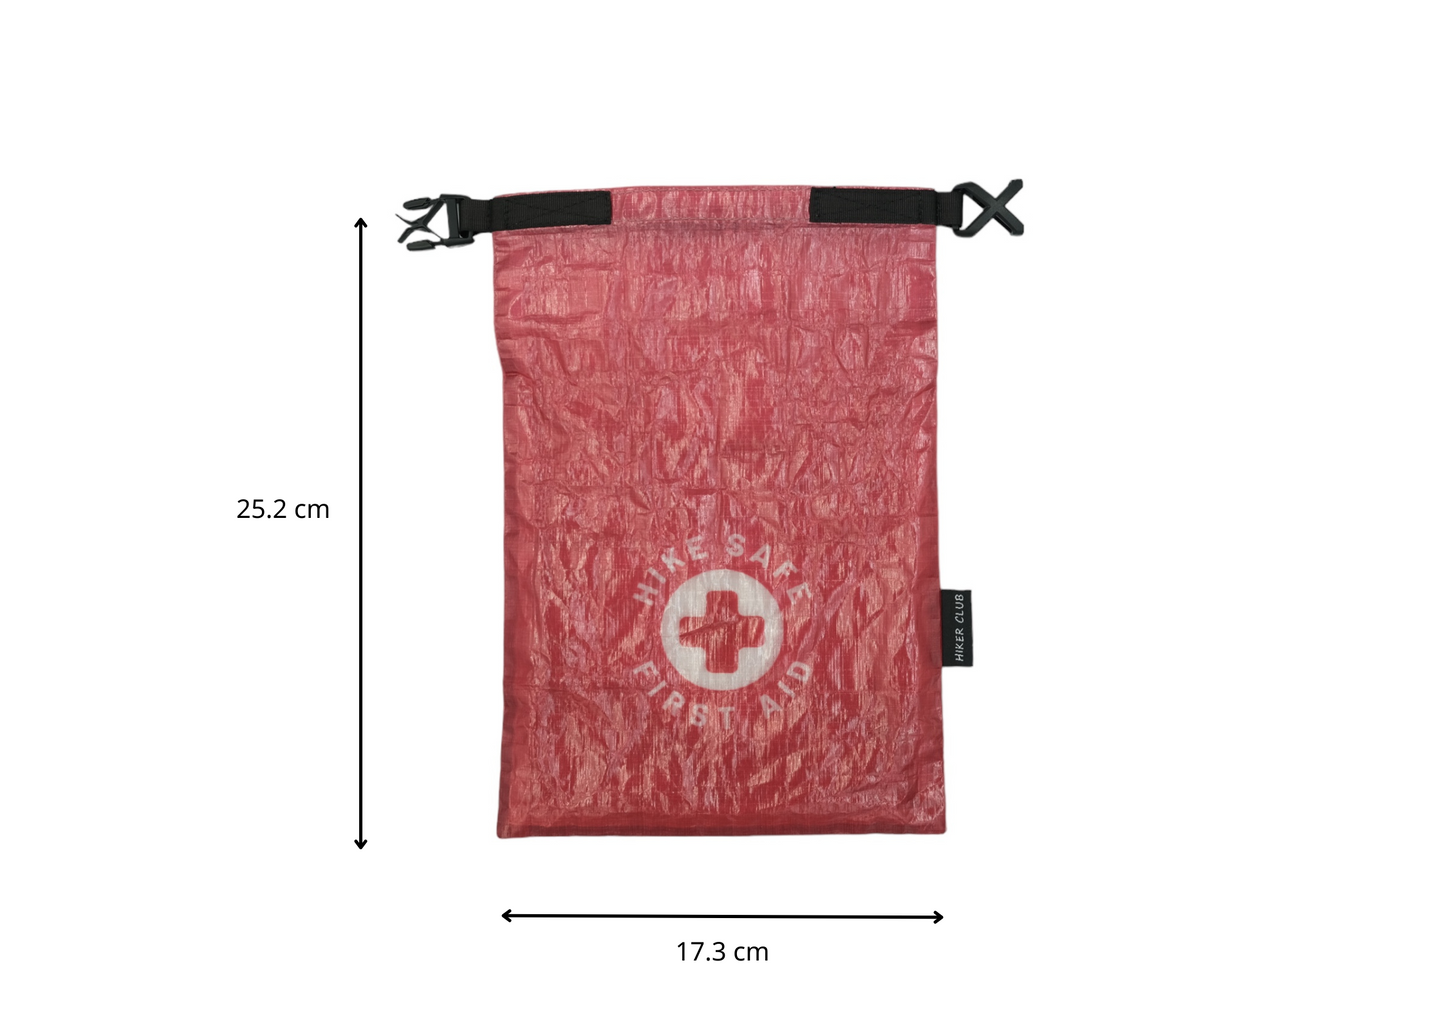 Hike Safe First Aid Bag